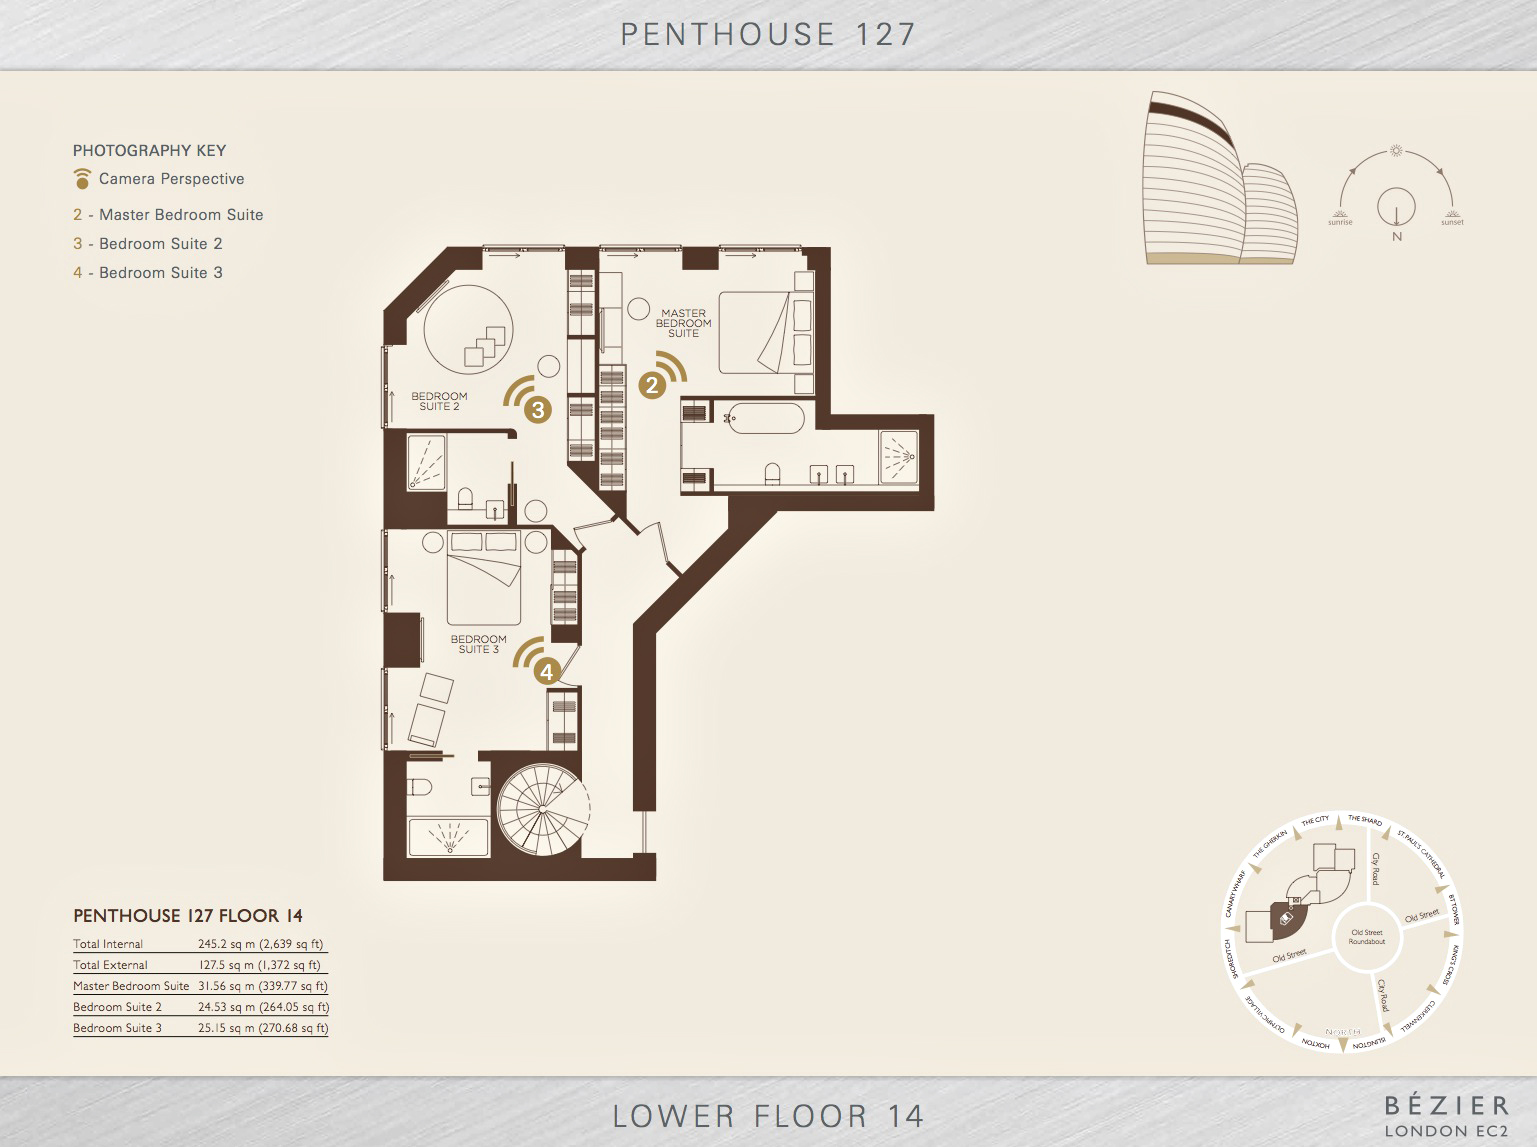 Lower Floor 14 Plan - Penthouse 127 Bezier EC2 - London, England, UK